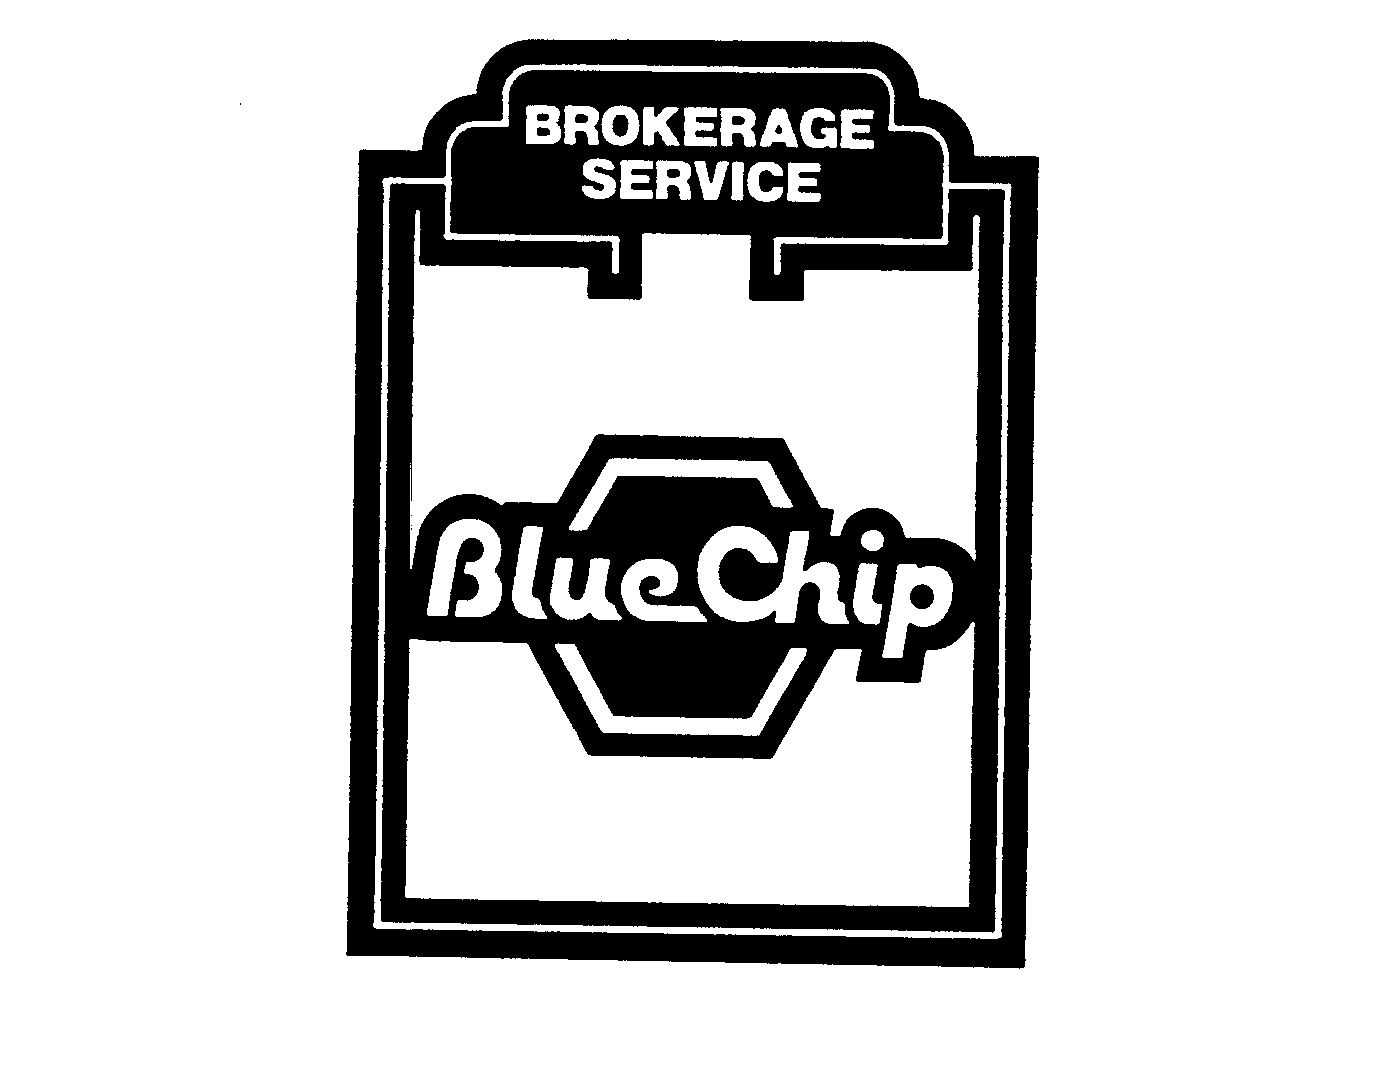  BLUE CHIP BROKERAGE SERVICE